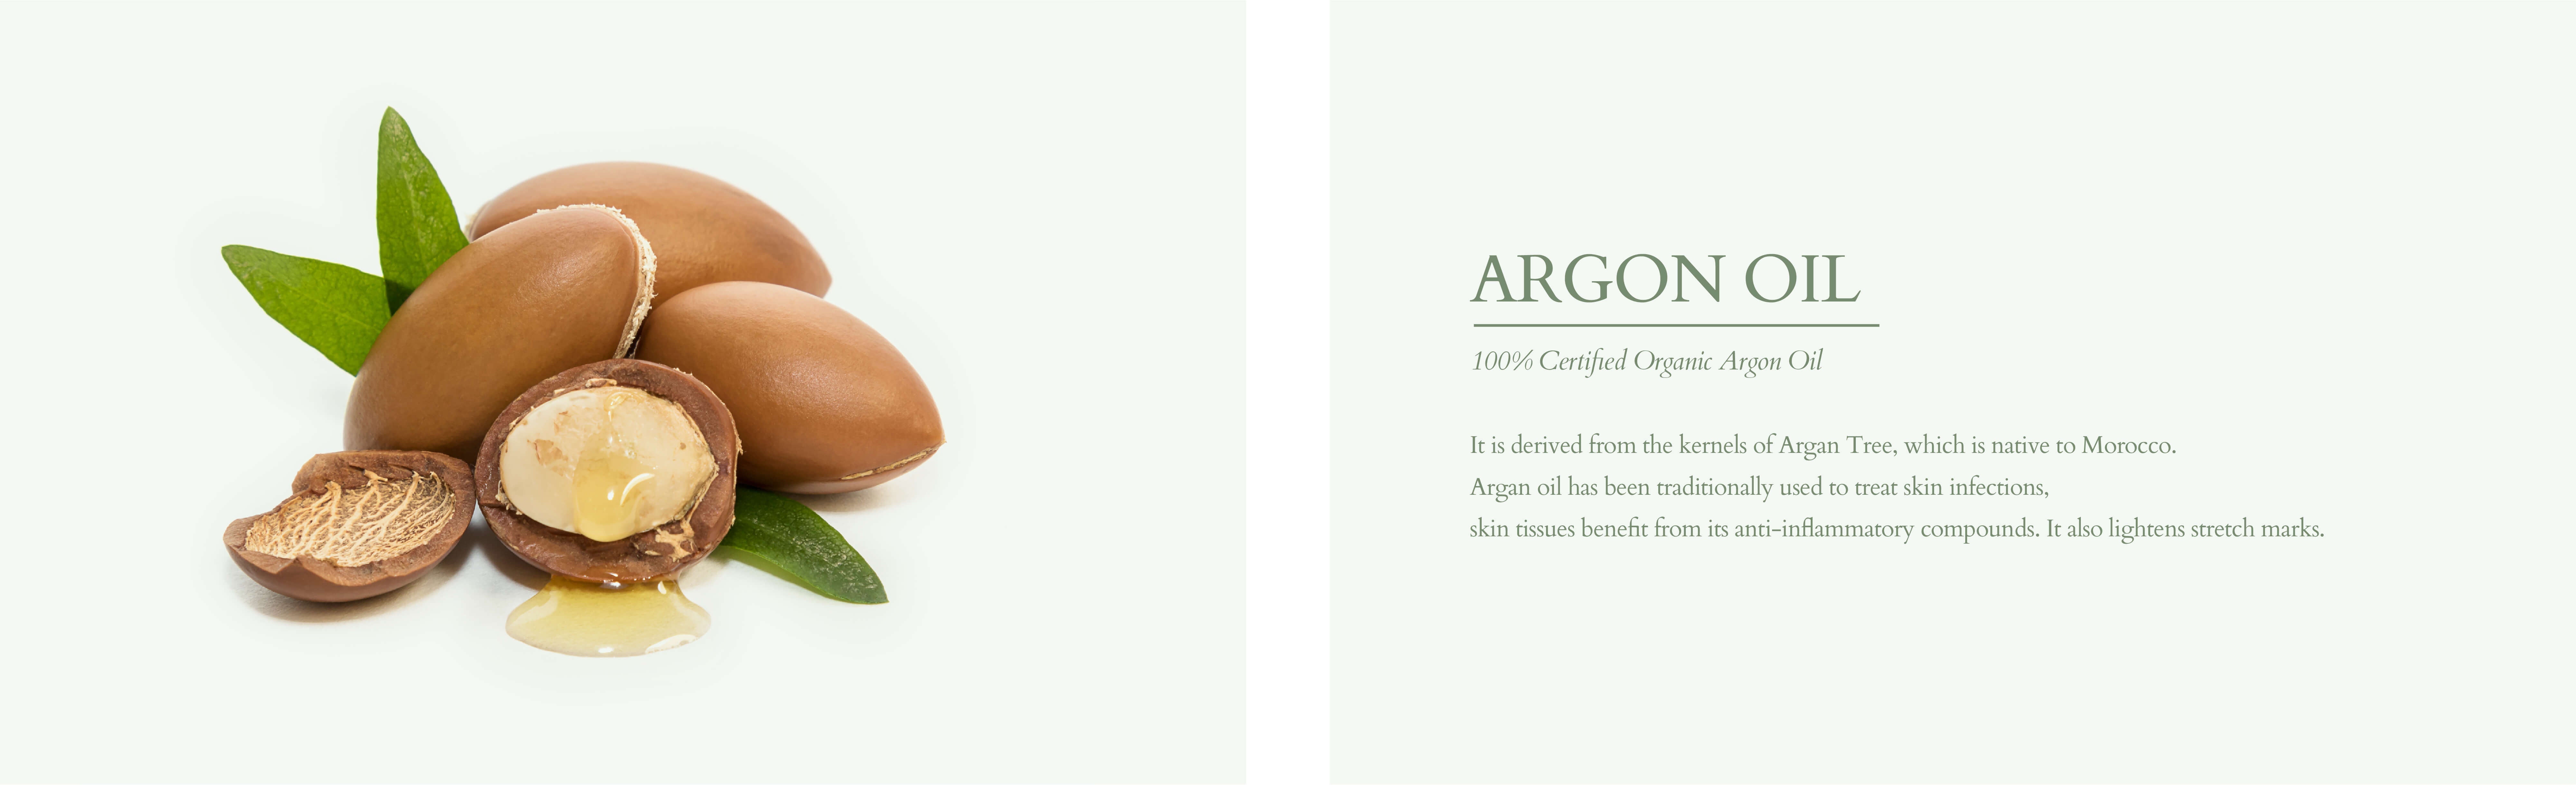 Organic argon oil for skin e472eac2 dd72 42d5 9d76 47243a53c66c